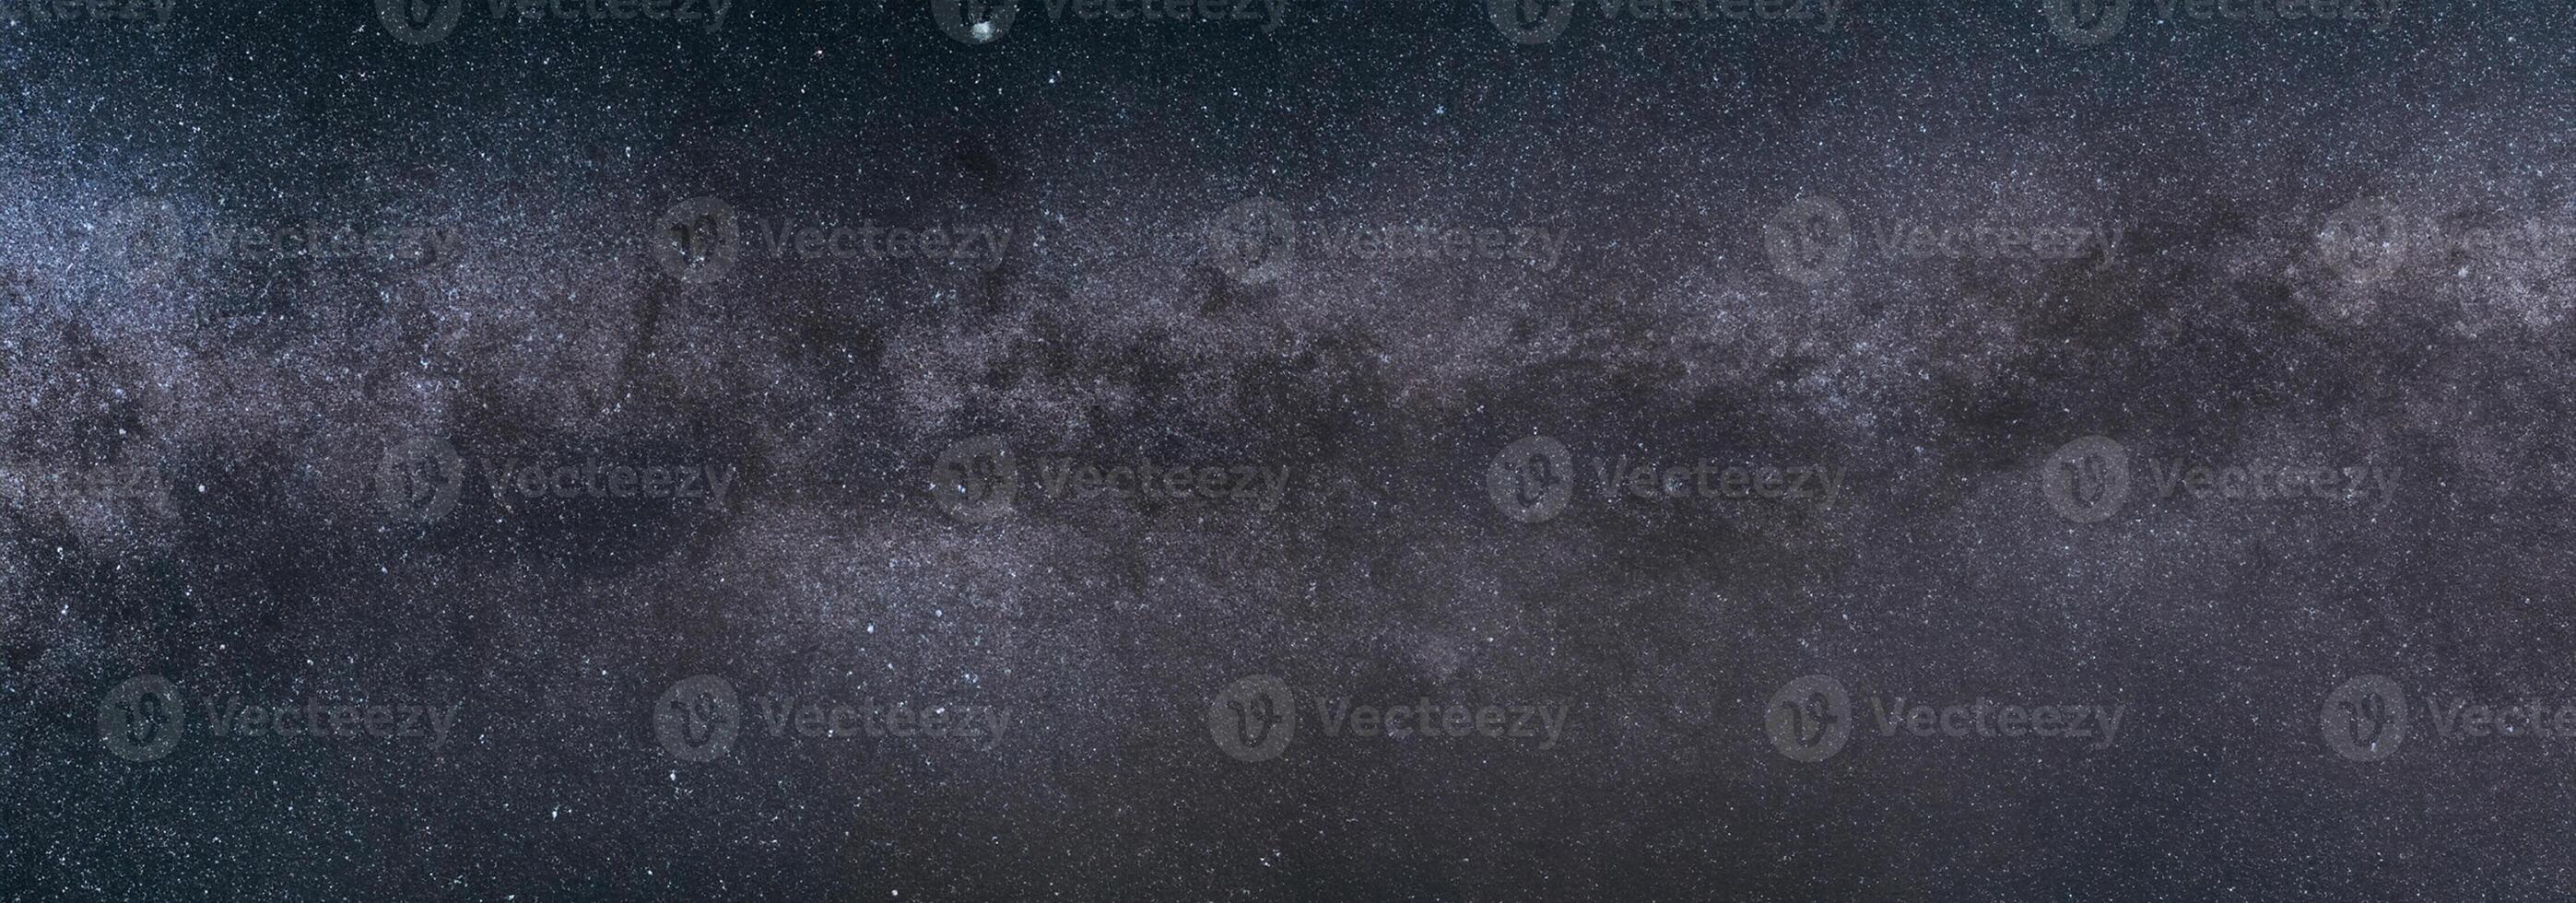 sterrenhemel nacht lucht met melkachtig manier heelal, natuurlijk panoramisch achtergrond foto